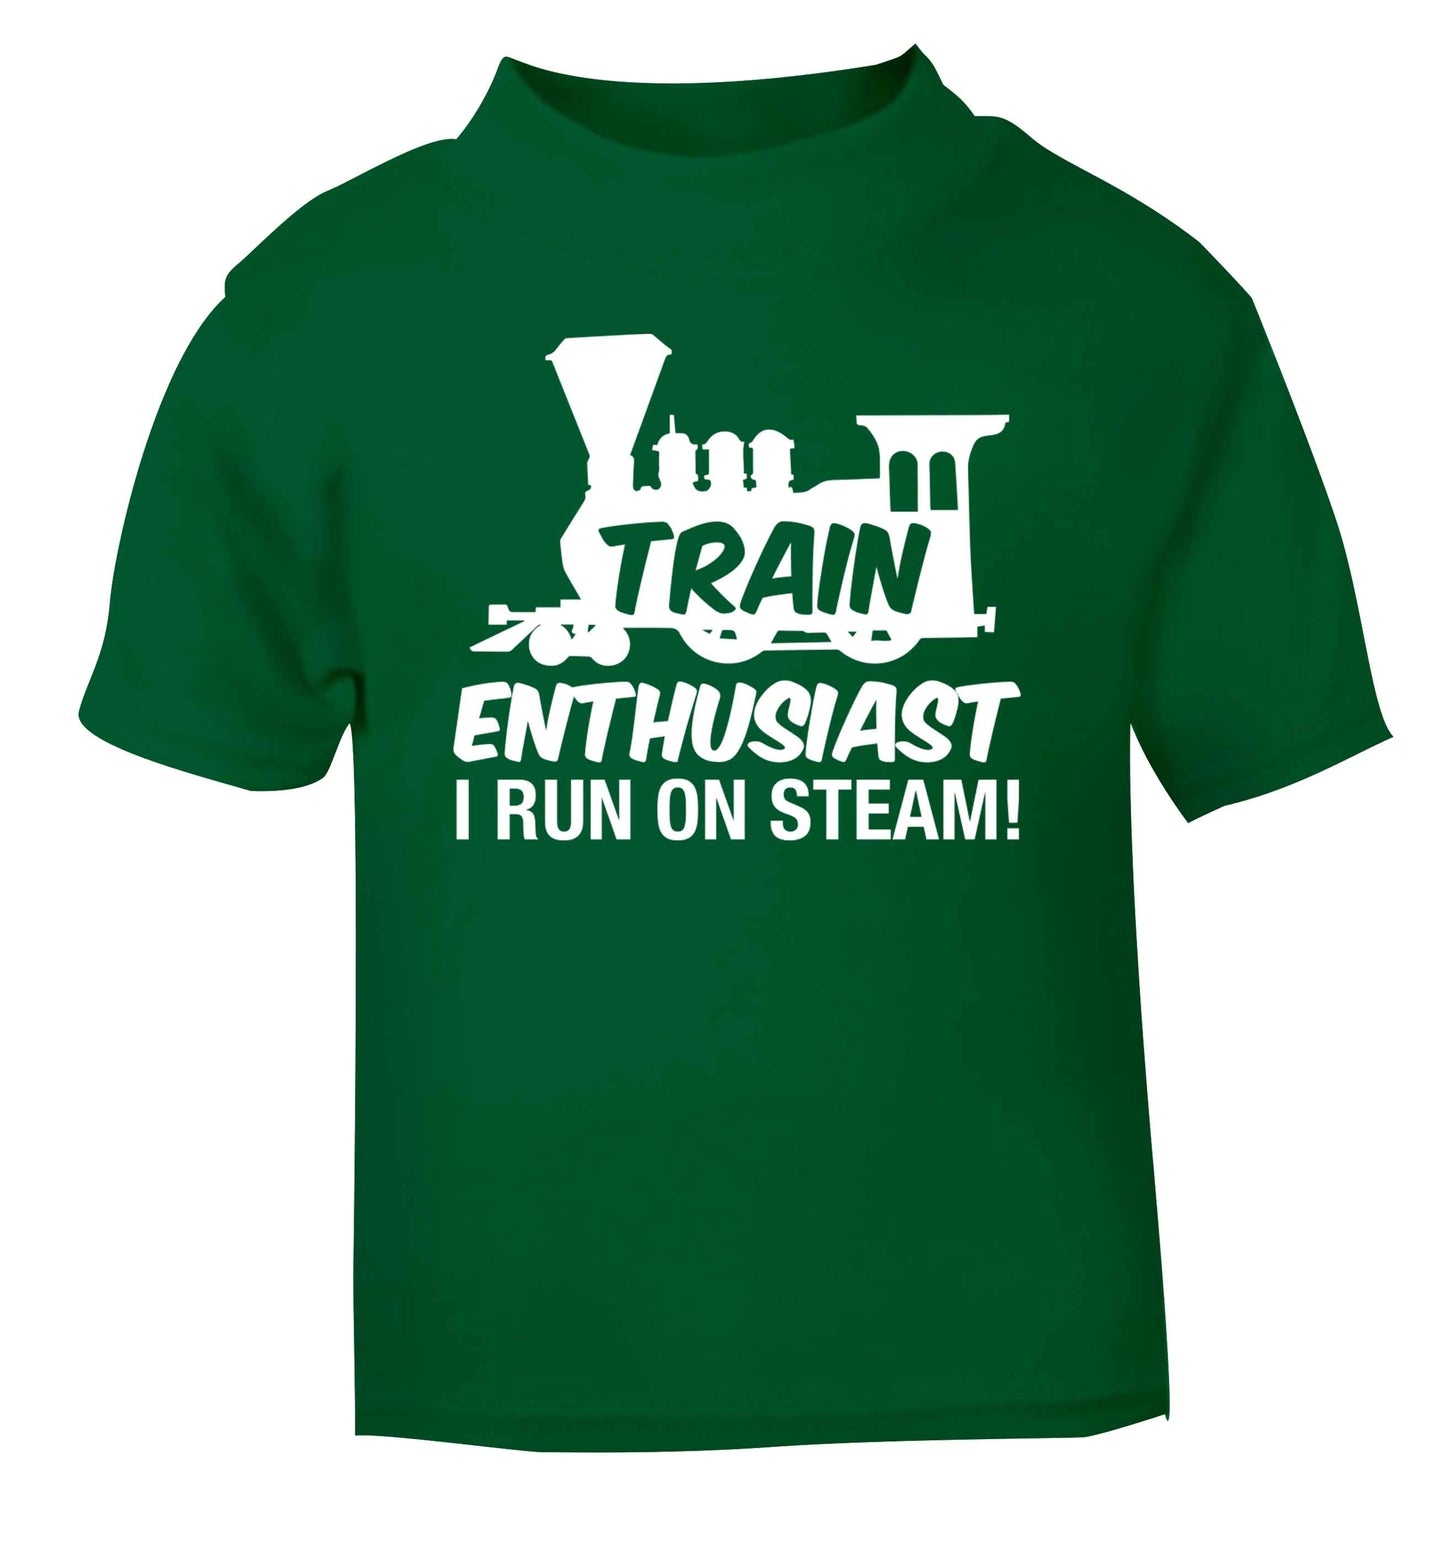 Train enthusiast I run on steam green Baby Toddler Tshirt 2 Years